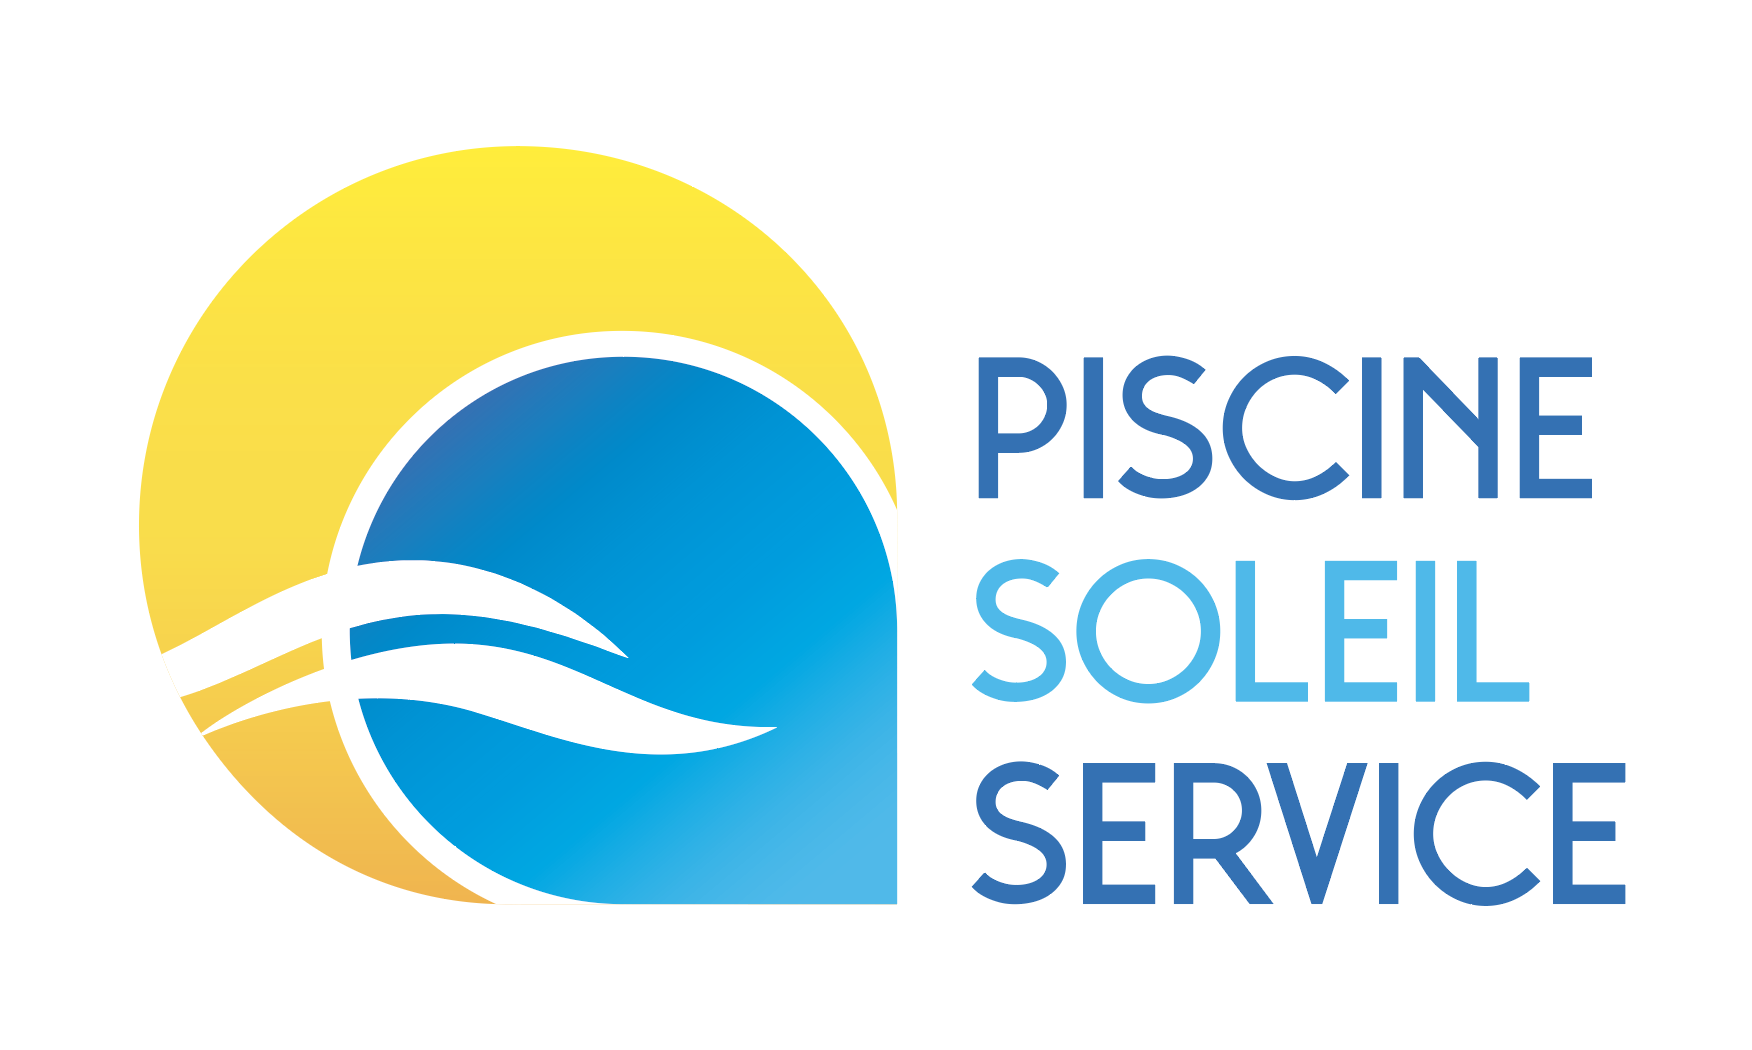 PISCINE SOLEIL SERVICE